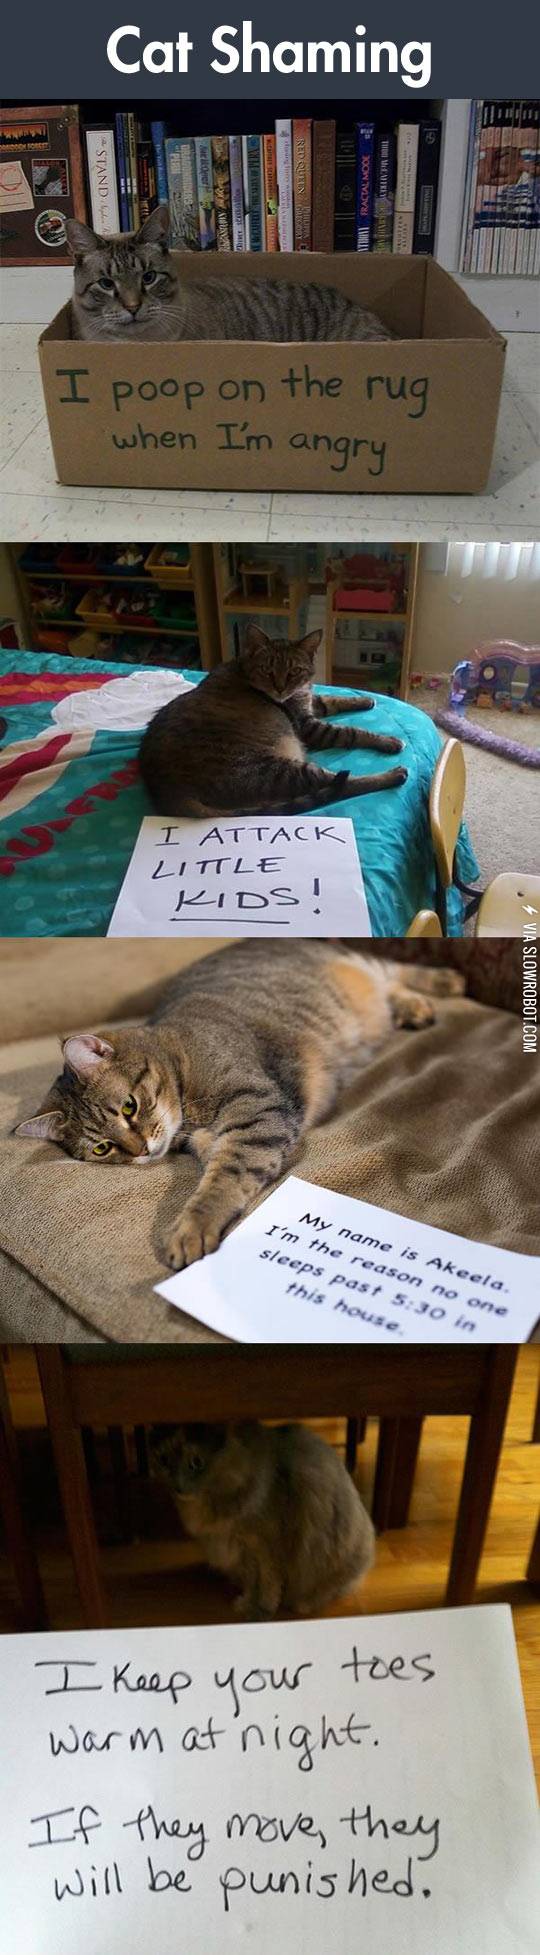 Cat+shaming.